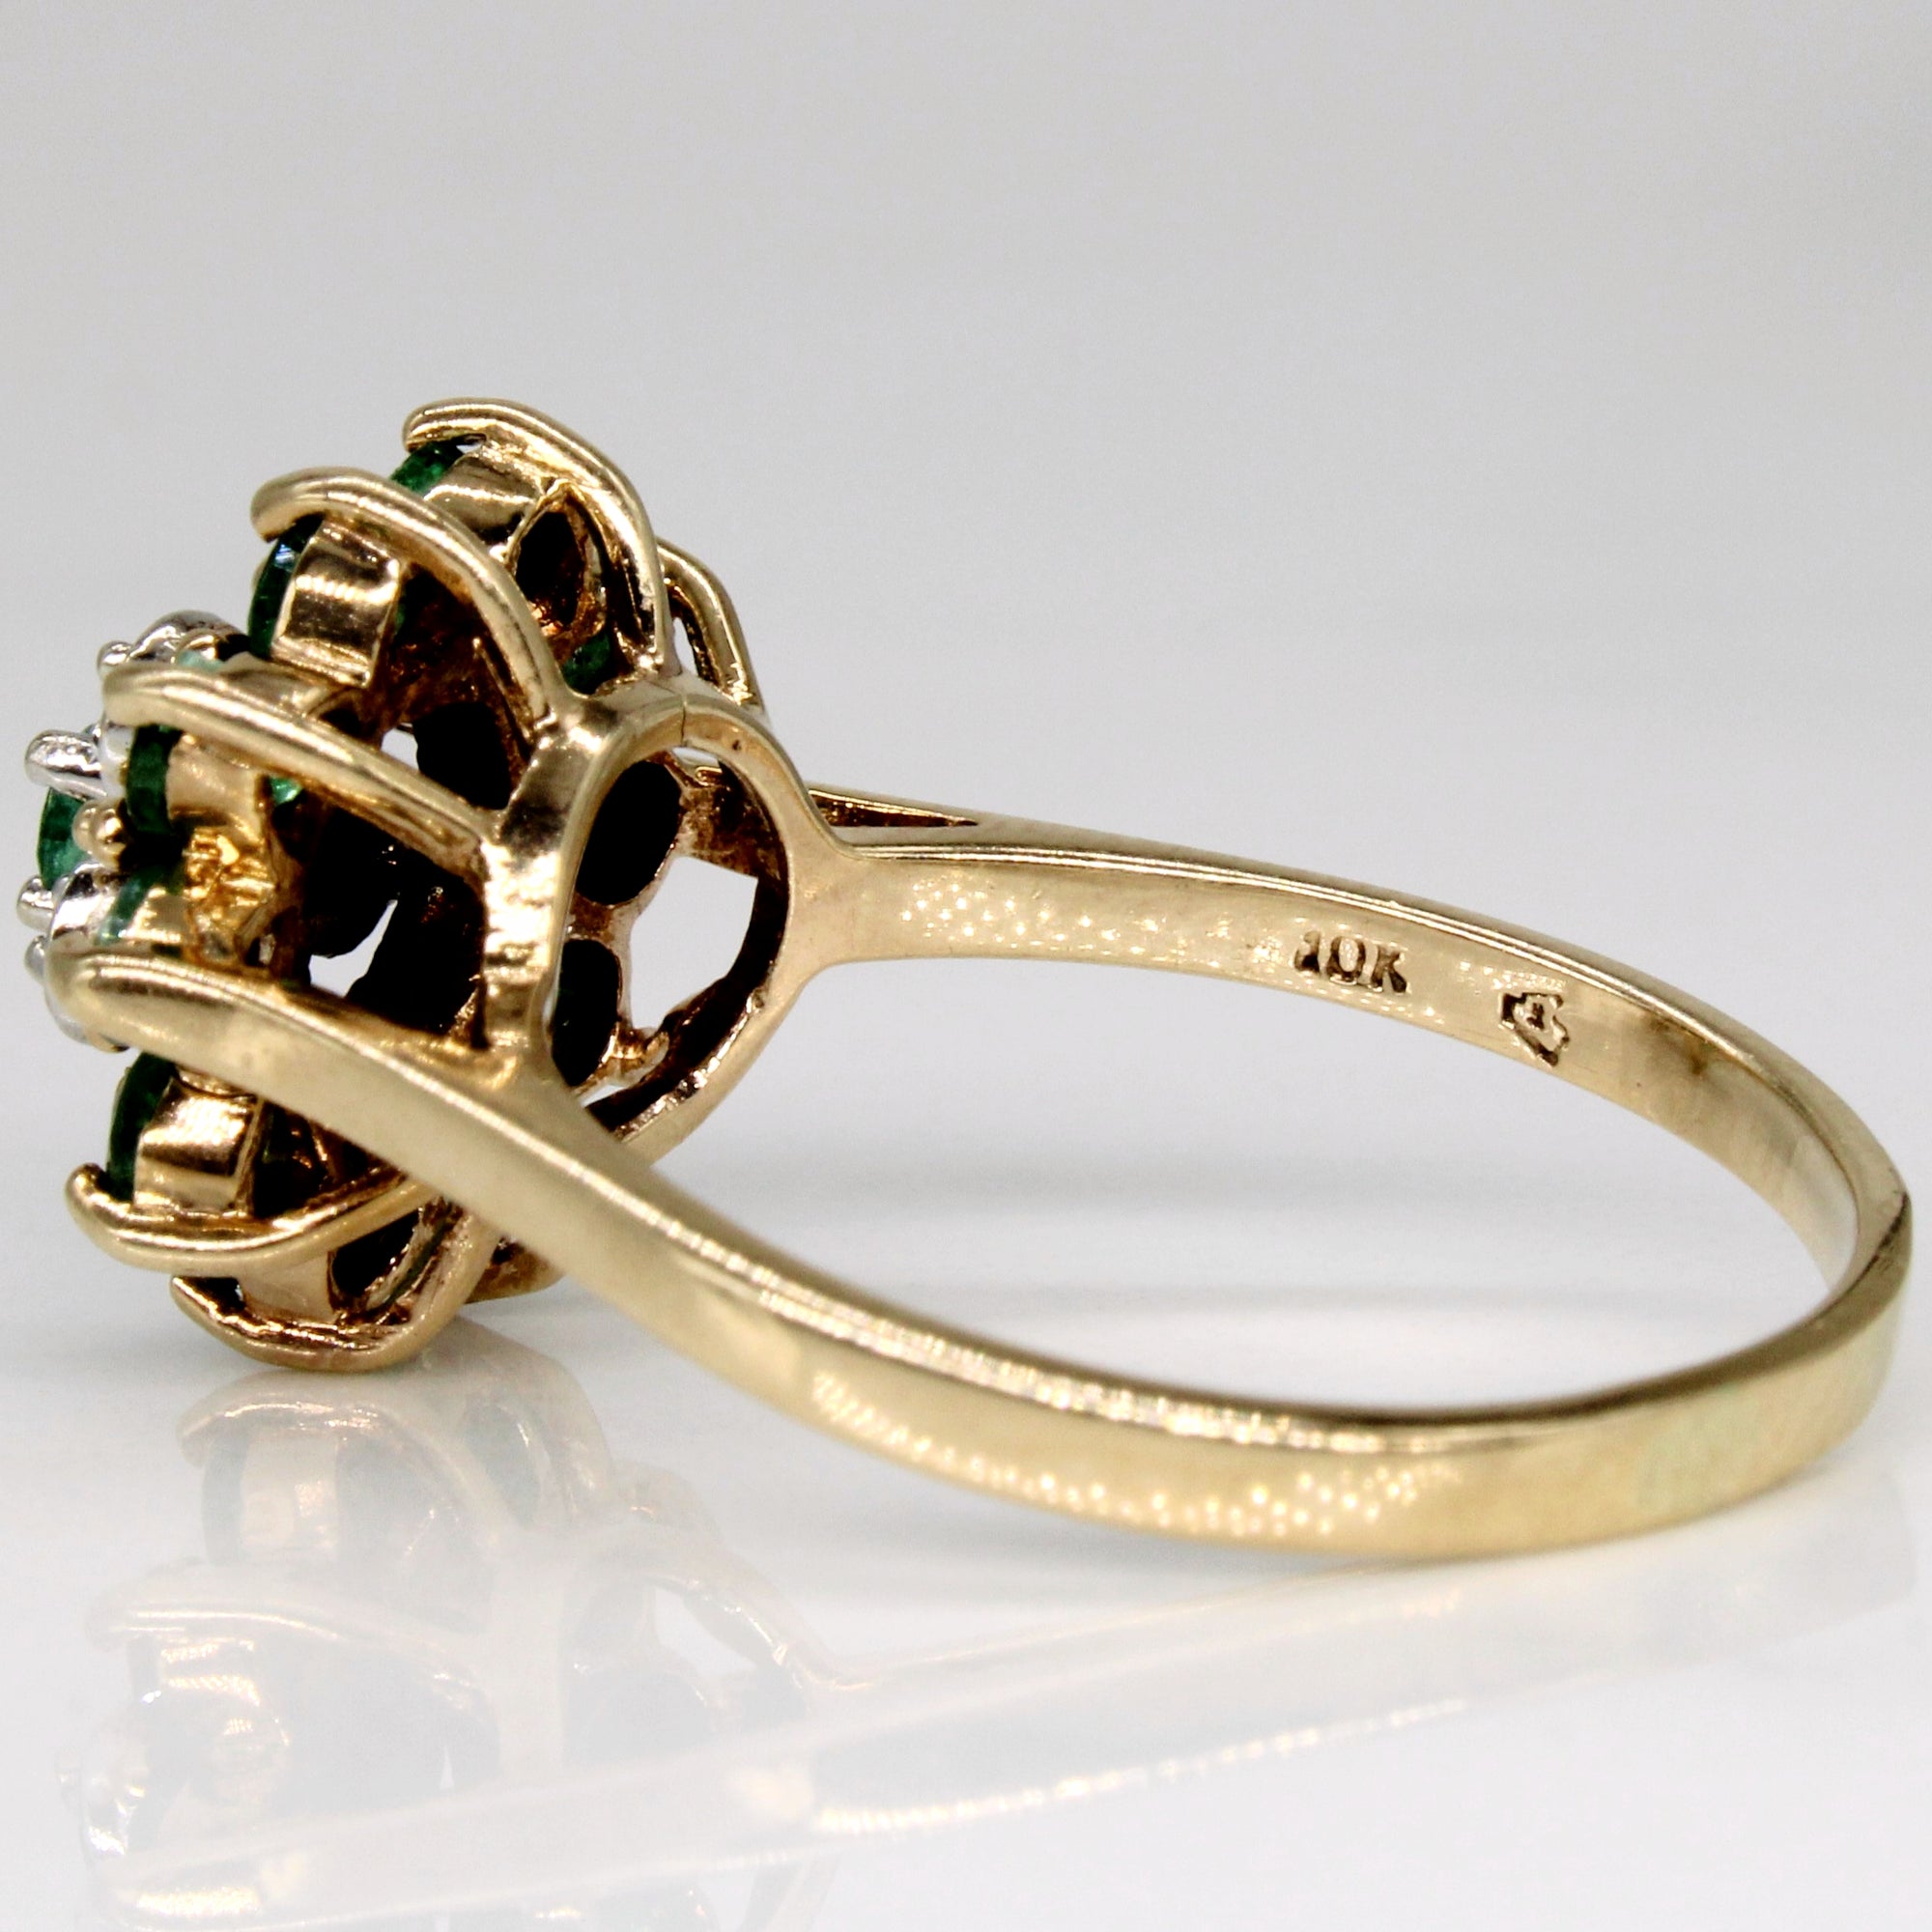 Emerald & Diamond Cocktail Ring | 1.00ctw, 0.03ctw | SZ 8 |